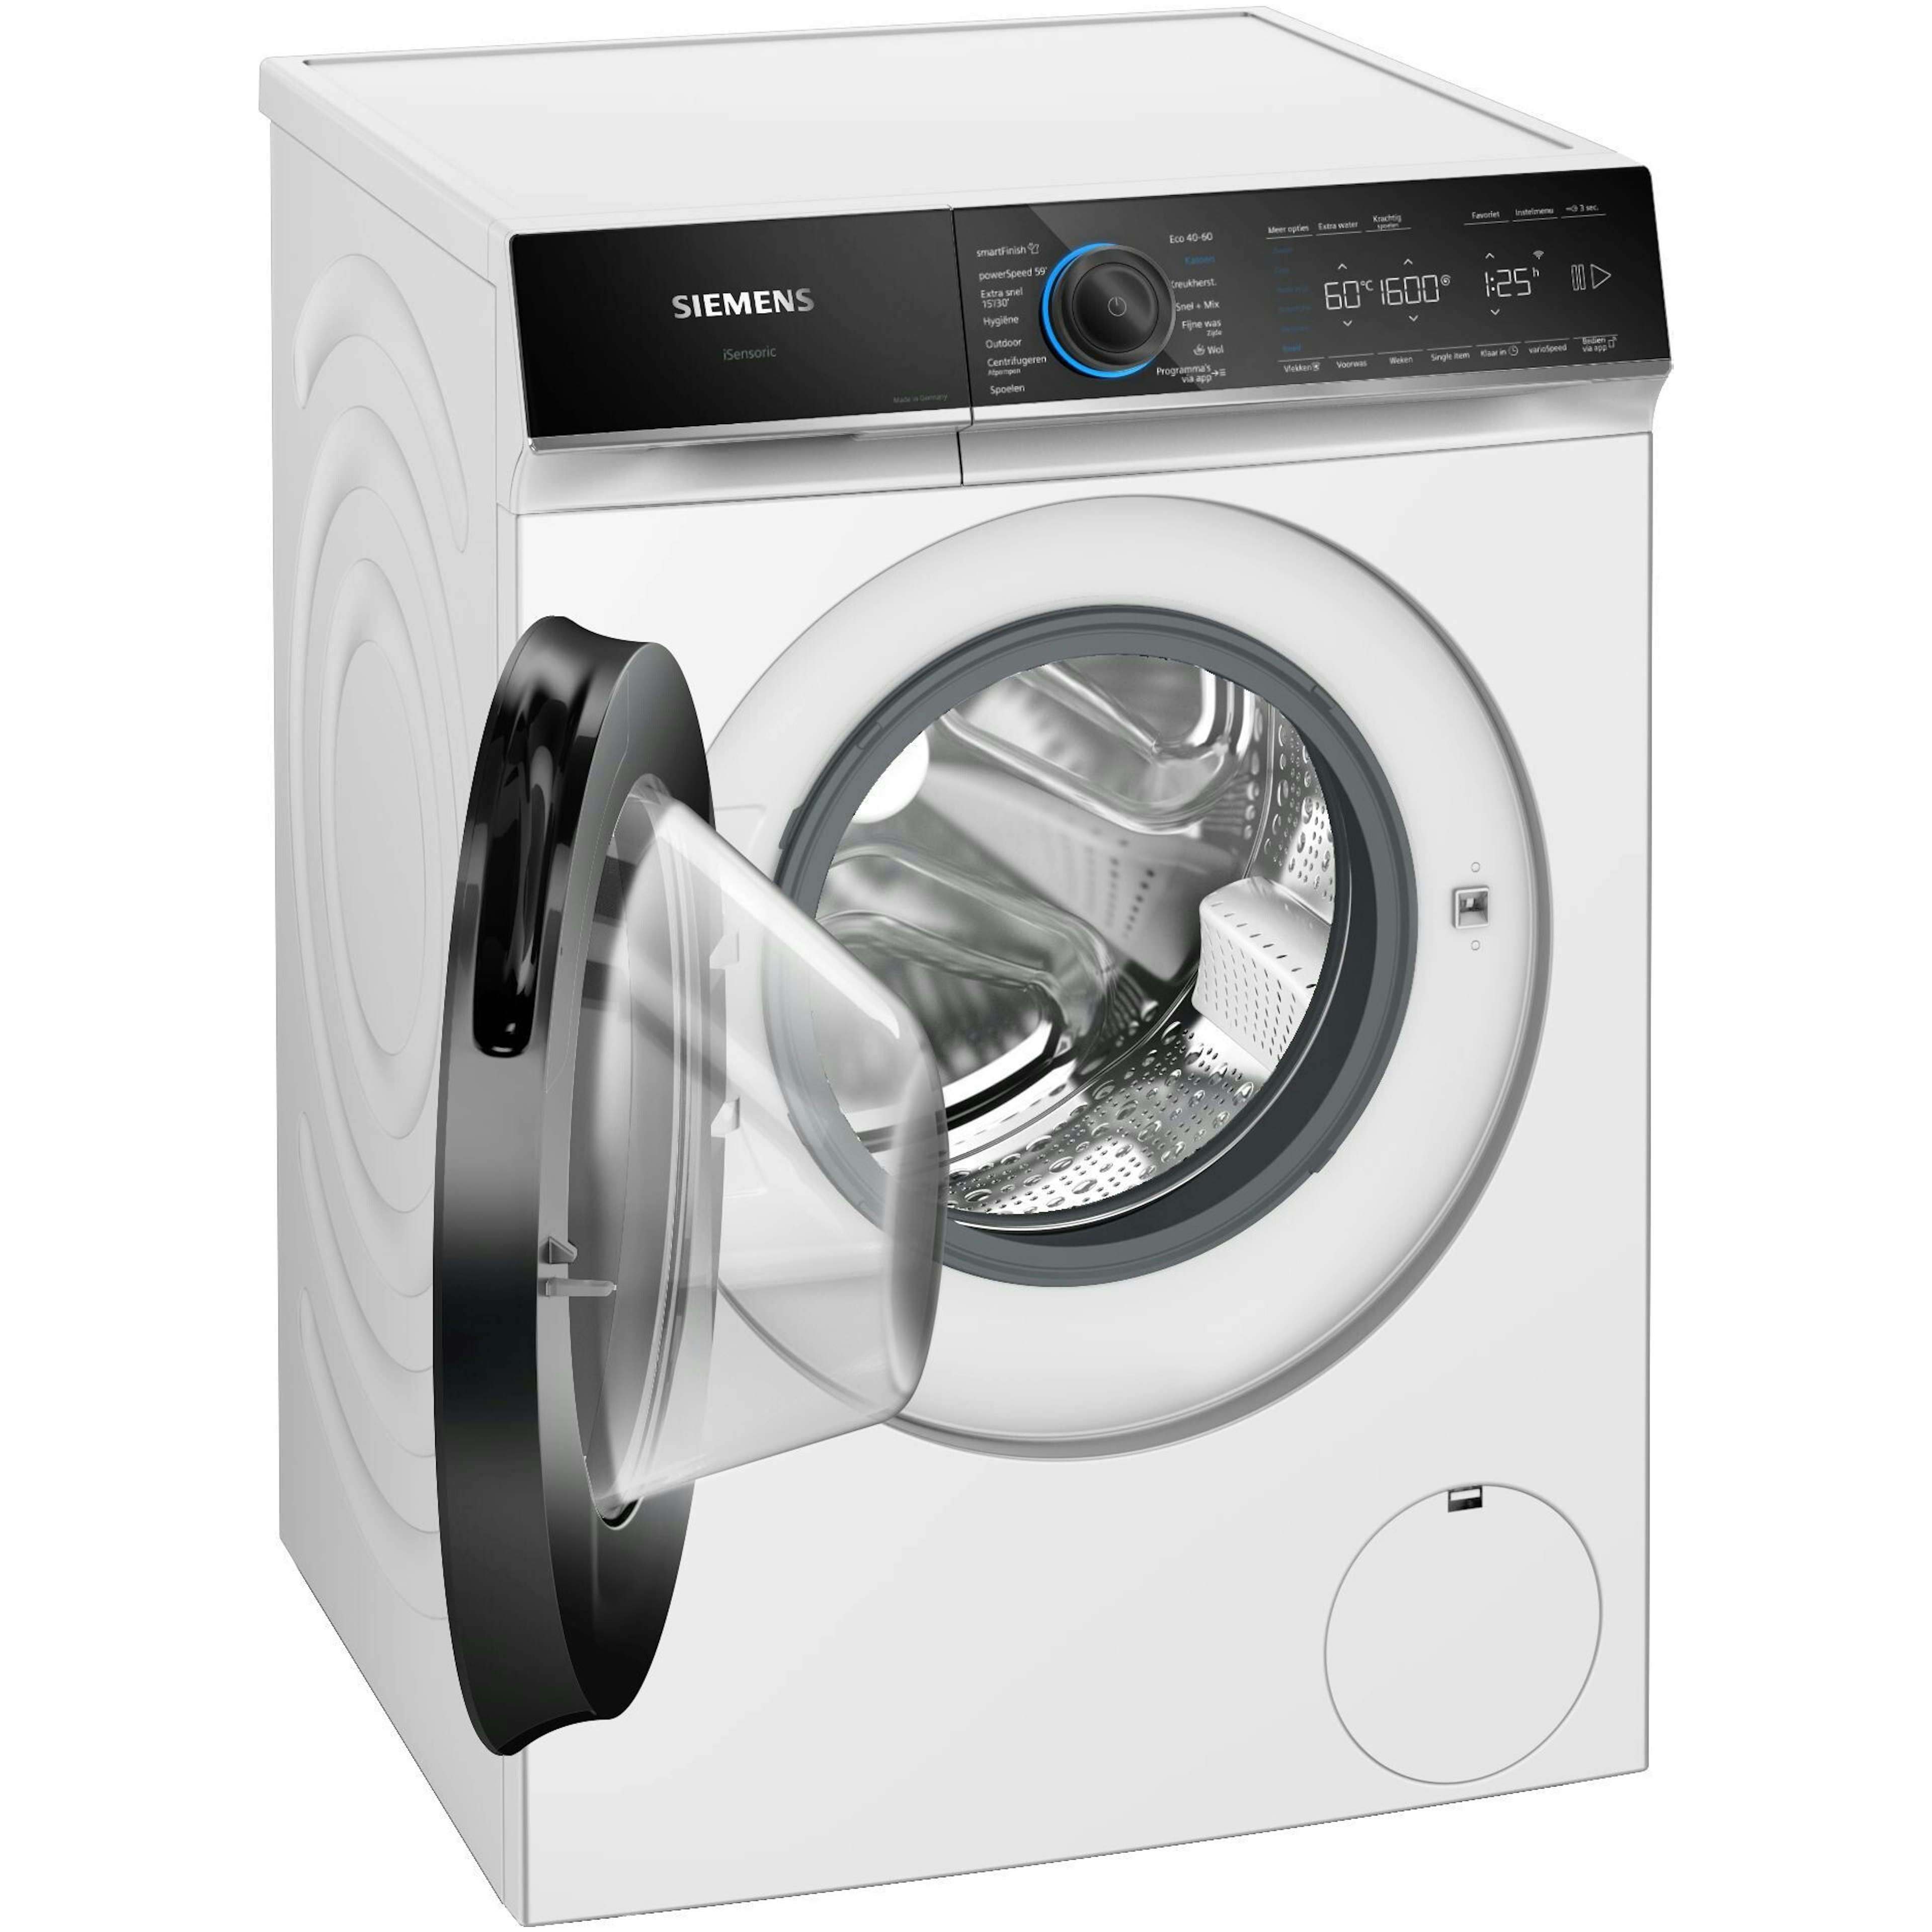 Siemens wasmachine WG56B205NL afbeelding 3